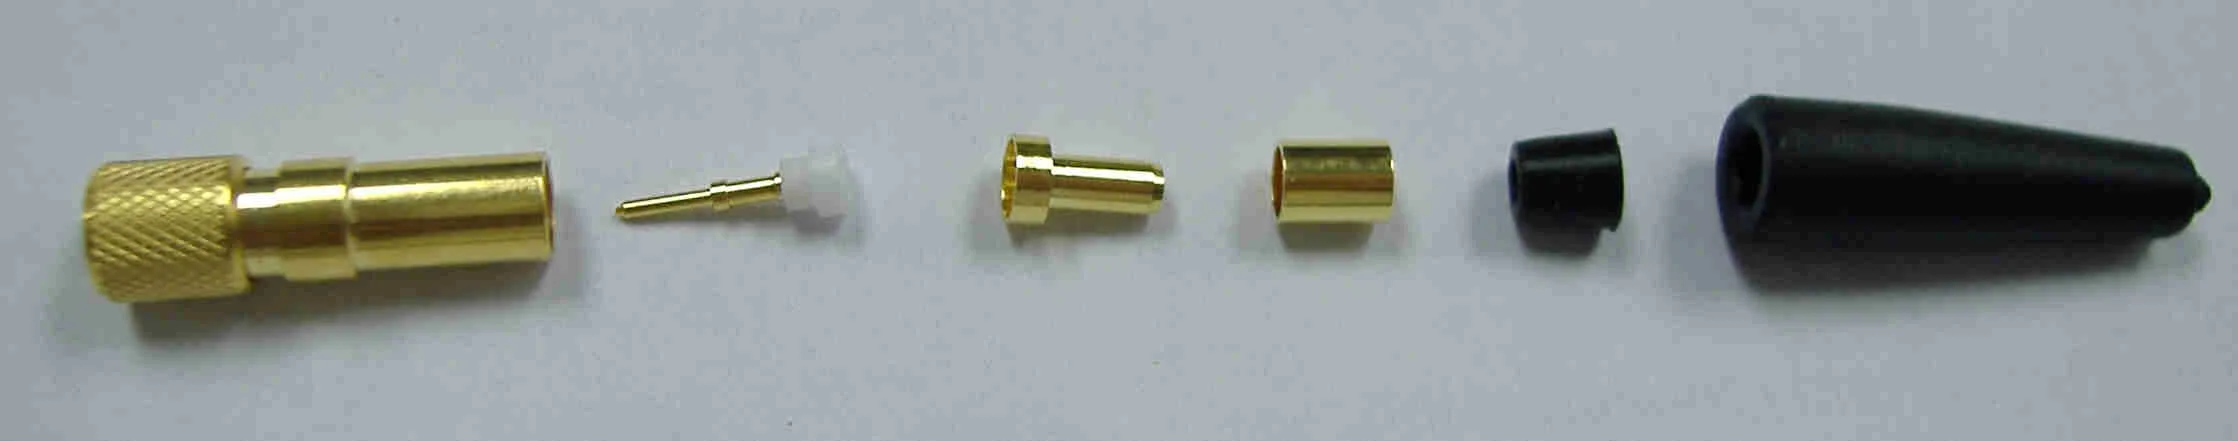 microdot to lemo connector